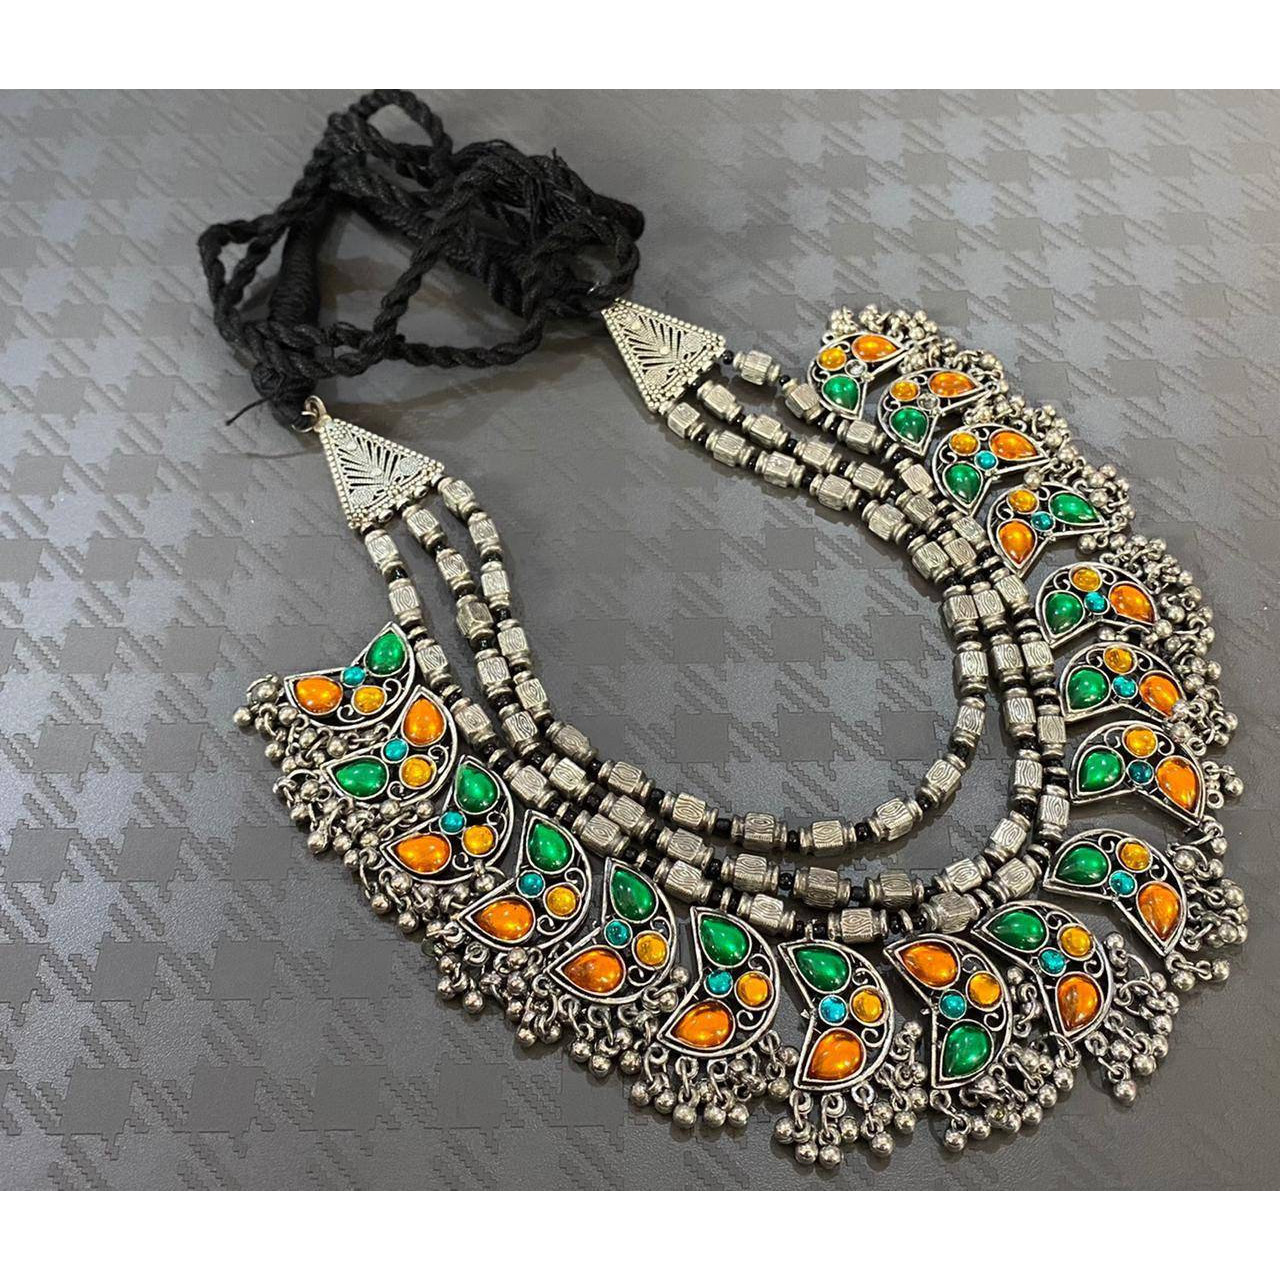 Multilayer necklace, stone jewellery, silver oxidised necklace, jewelry set, German silver set, Indian oxidized set, handmade stone jewelry